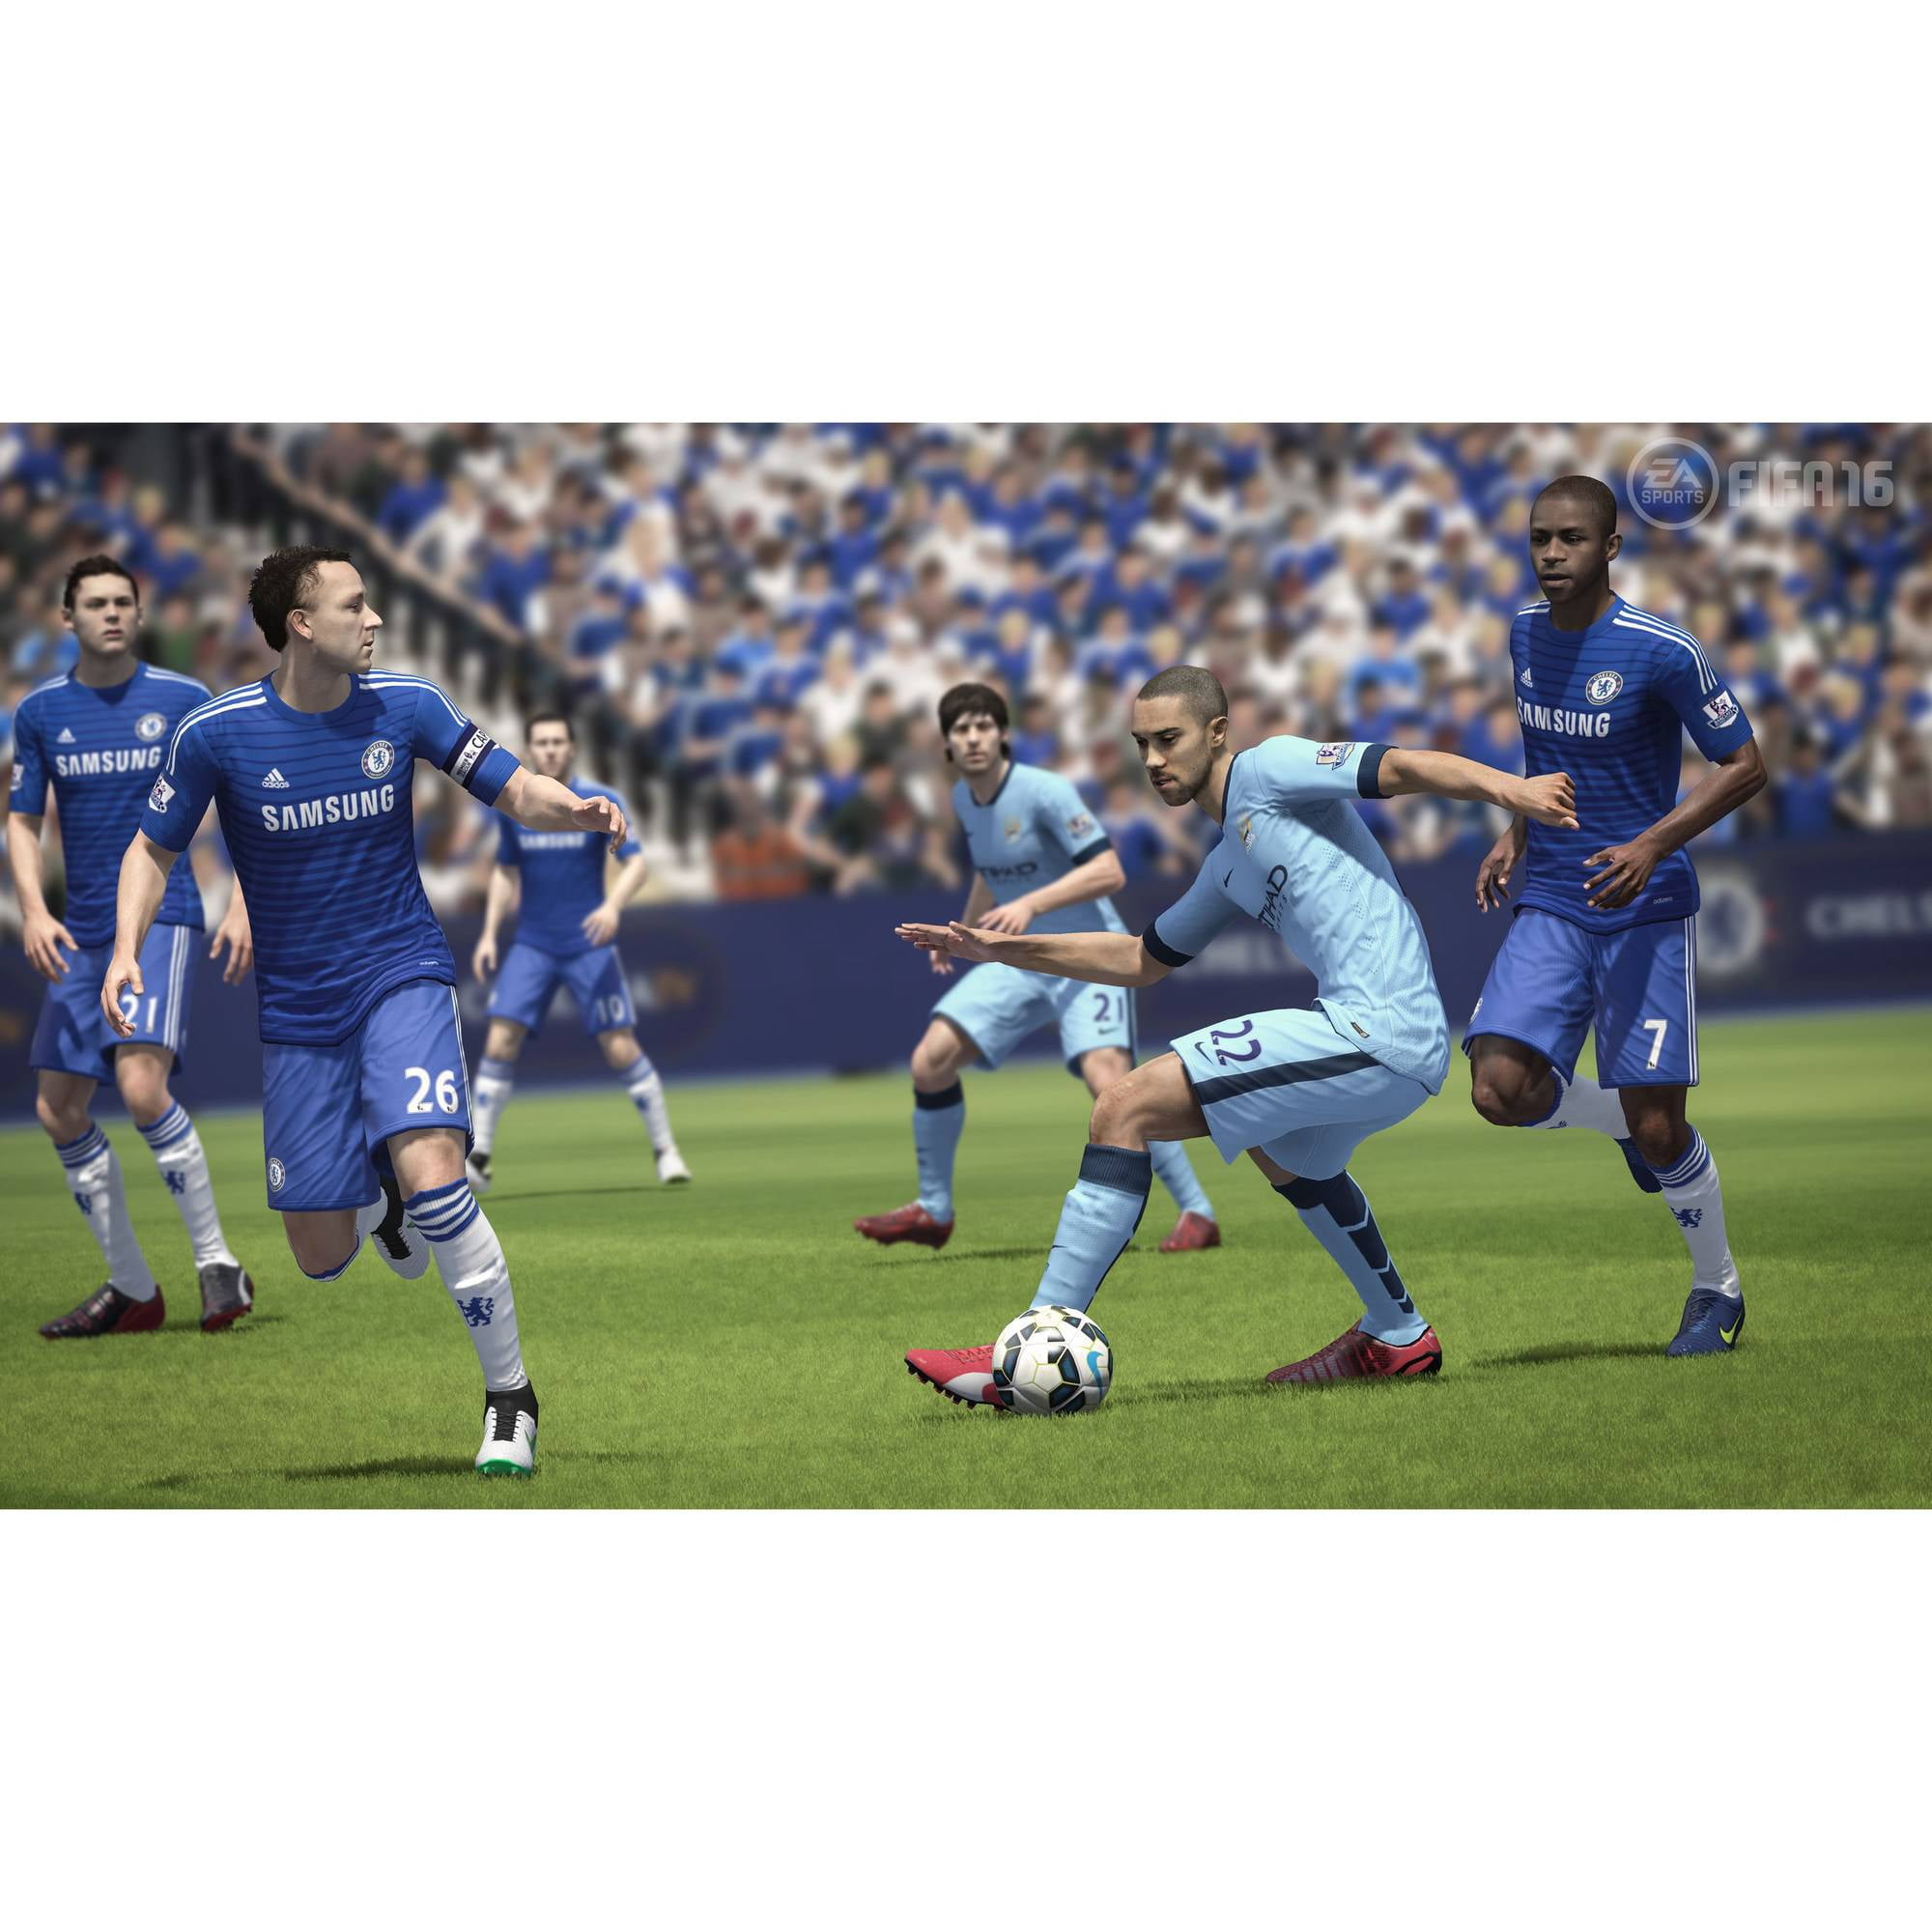 FIFA 16 - Standard Edition - PlayStation 3